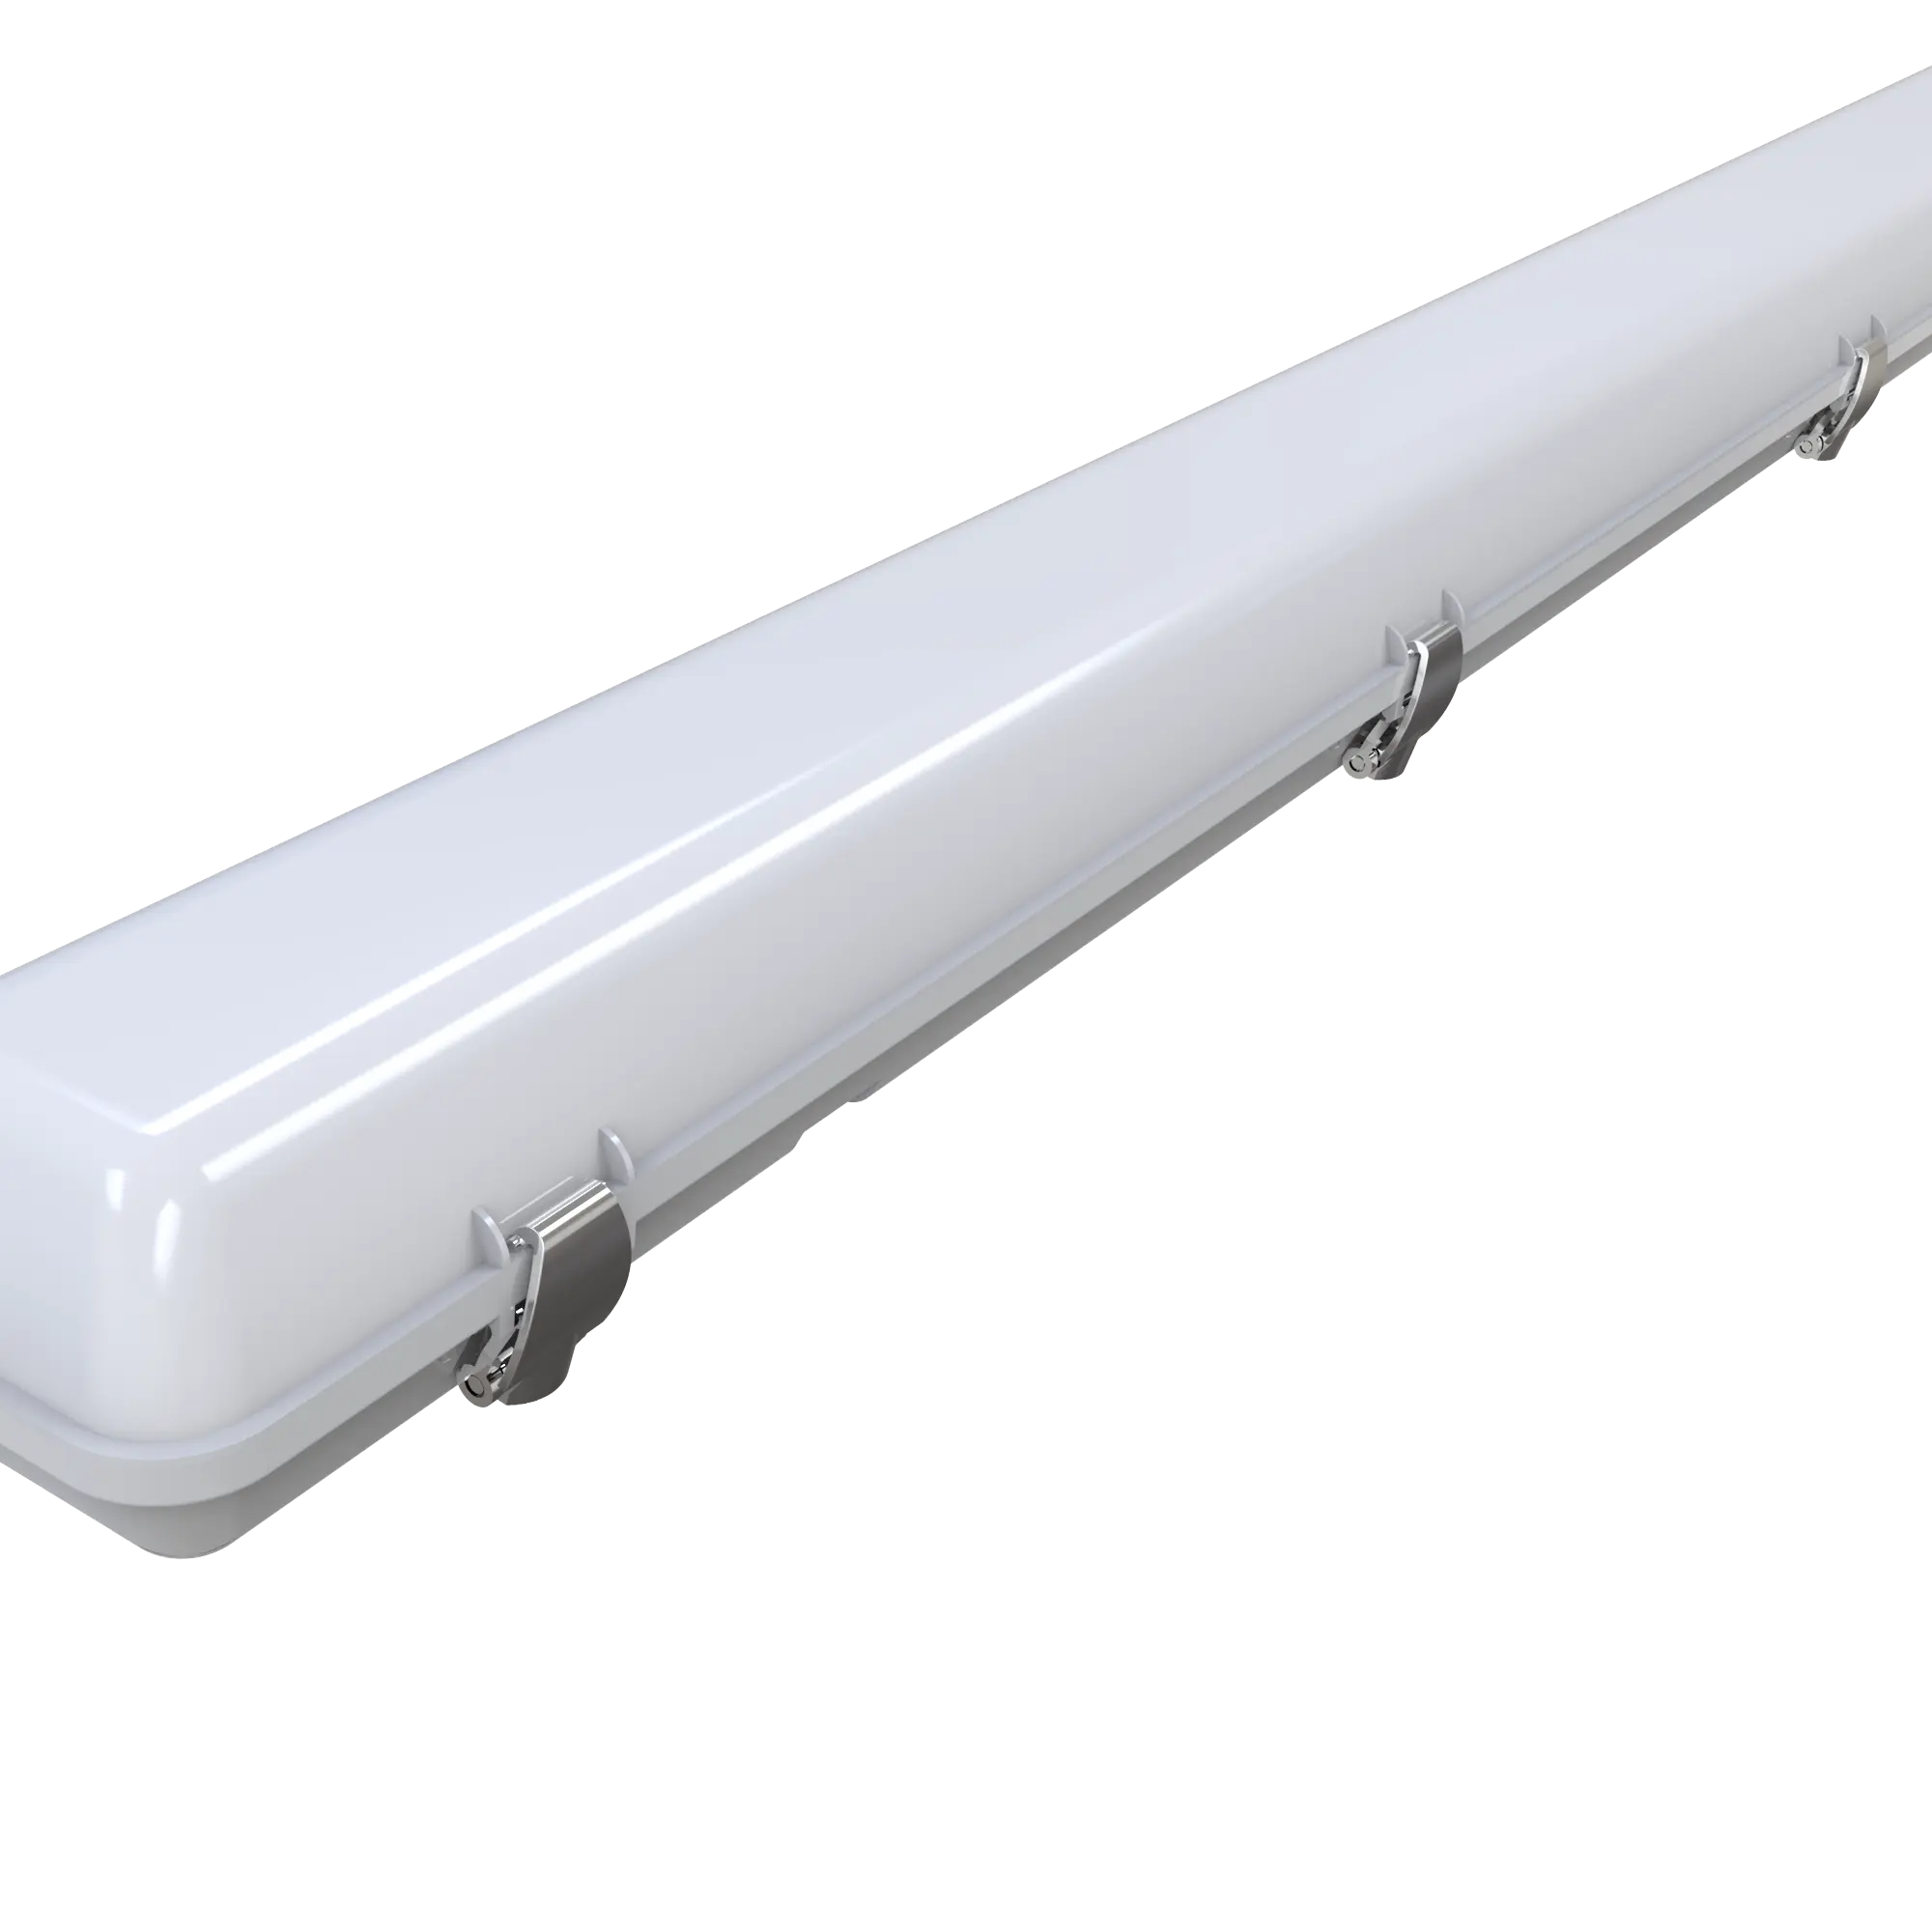 Shinelong Hot Vapor Strakke Explosieveilige Licht Cleanroom Ip65 Lineaire 4Ft 40W Led Verlichting Armatuur Dlc